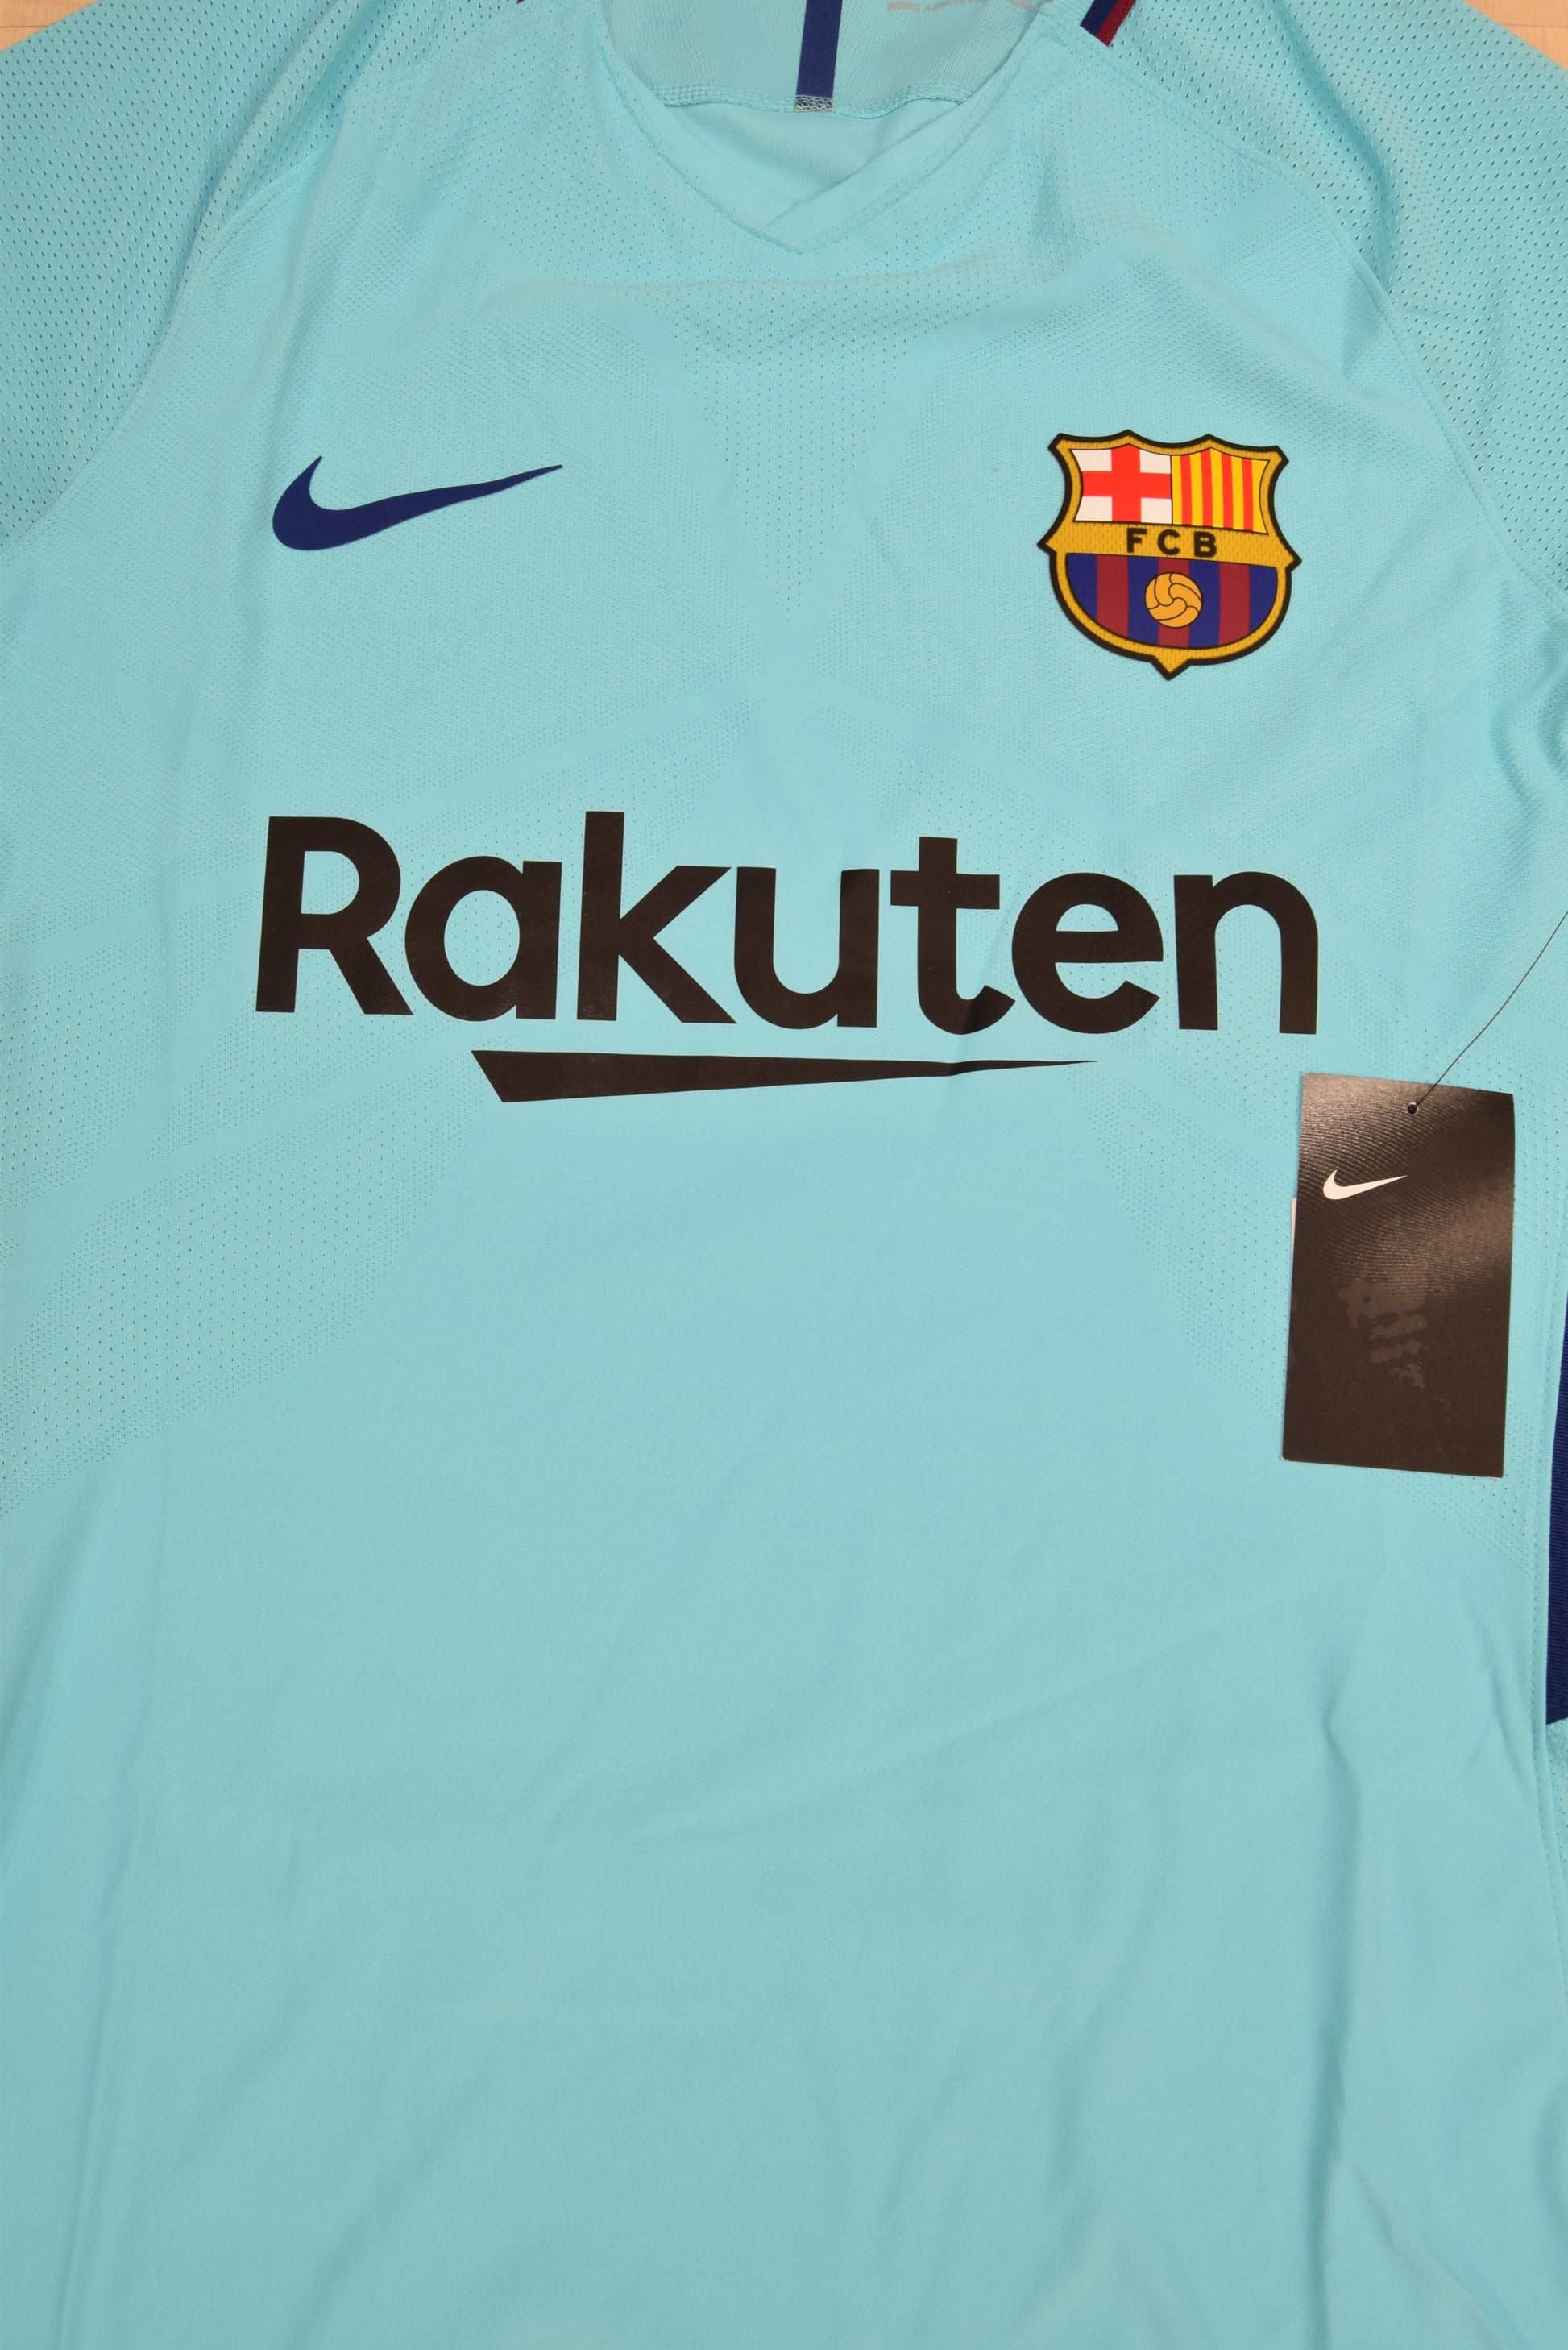 Authentic New FC Barcelona Nike Aeroswift Player Issue Away Football Shirt 2017-2018 Long Sleeves BNWT Deadstock Size M Vivid Blue Rakuten Unicef